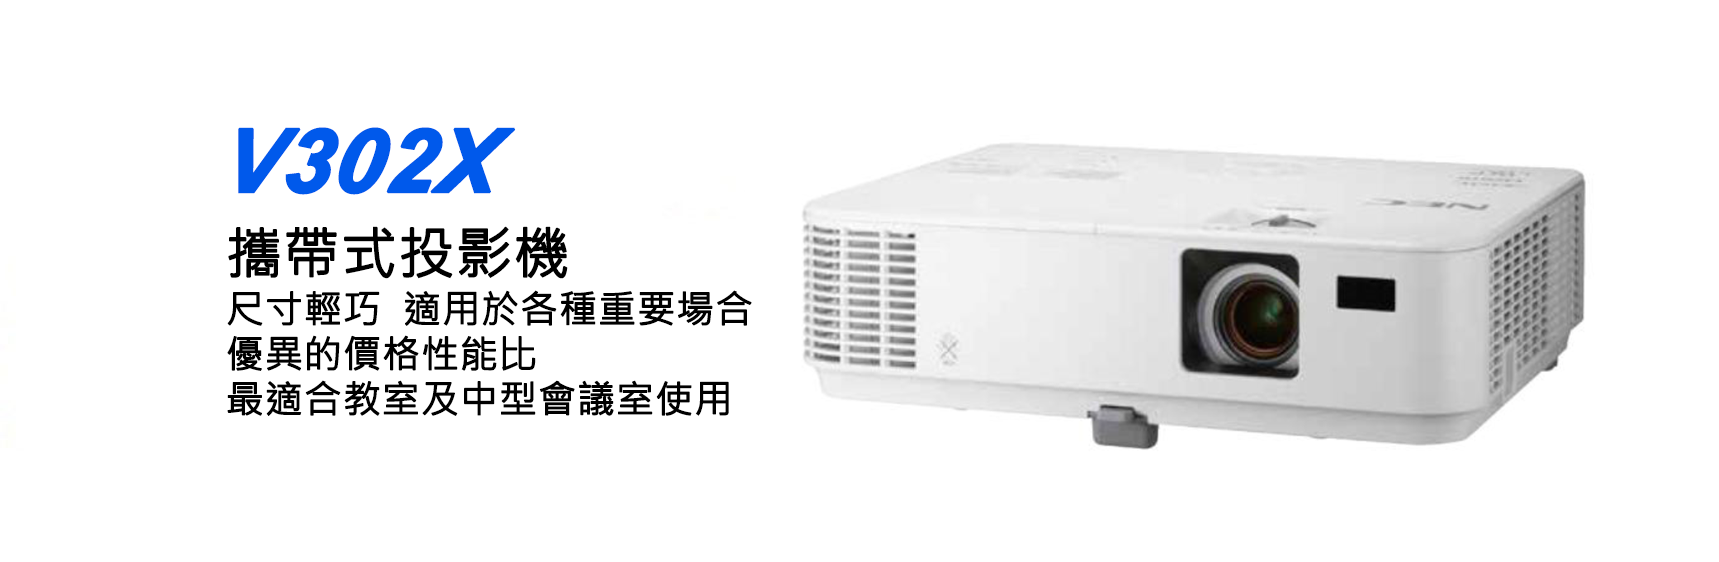 <br/><br/>  AviewS-NEC V302X投影機/3000流明/XGA/輕便型投影機/DLP<br/><br/>